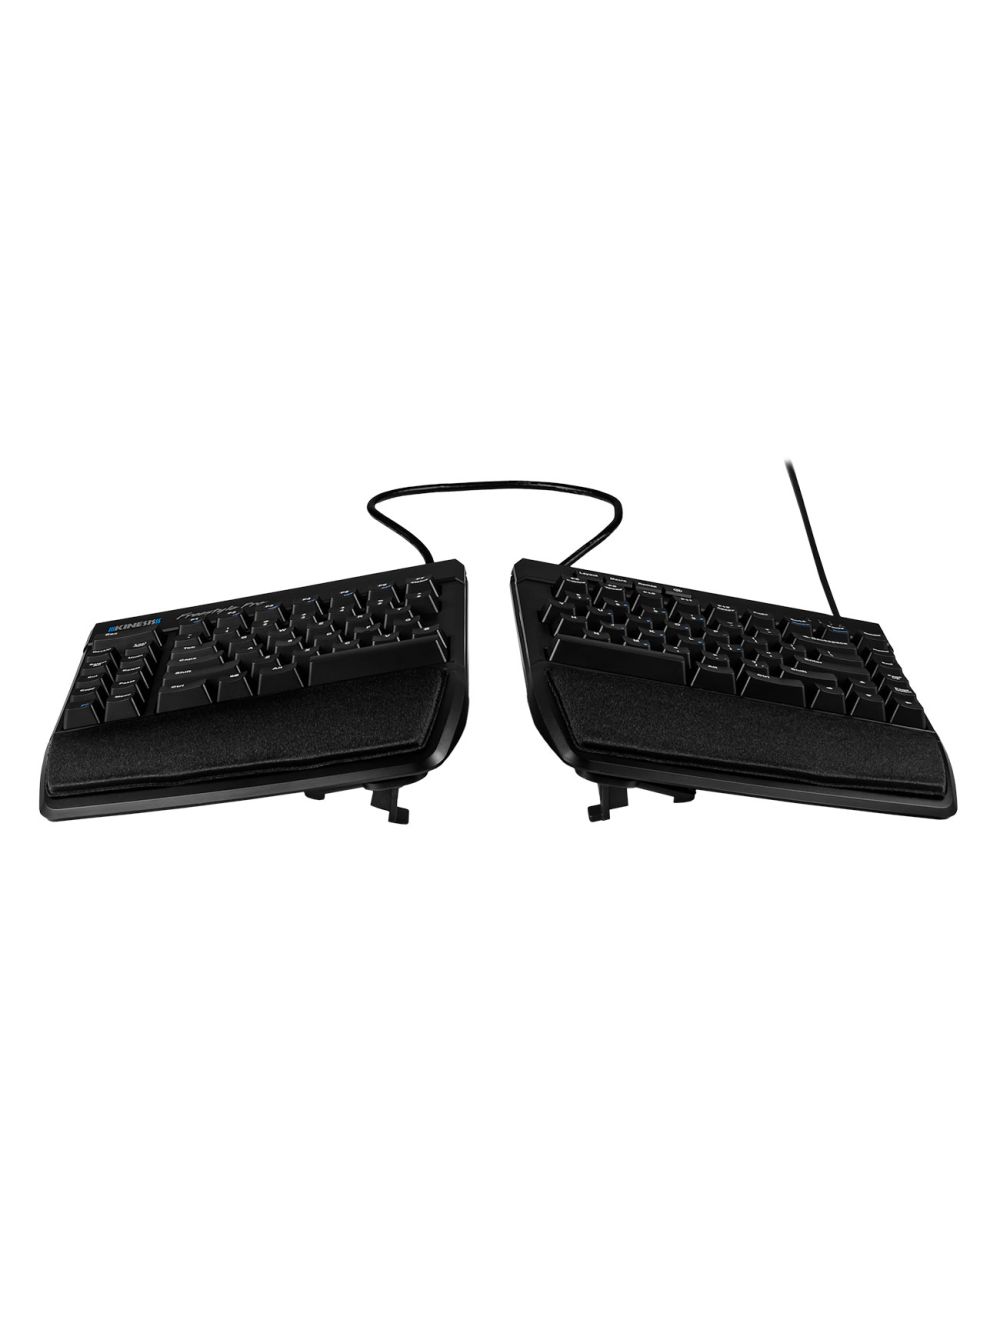 Ergonomic Keyboard Kinesis Freestyle Pro